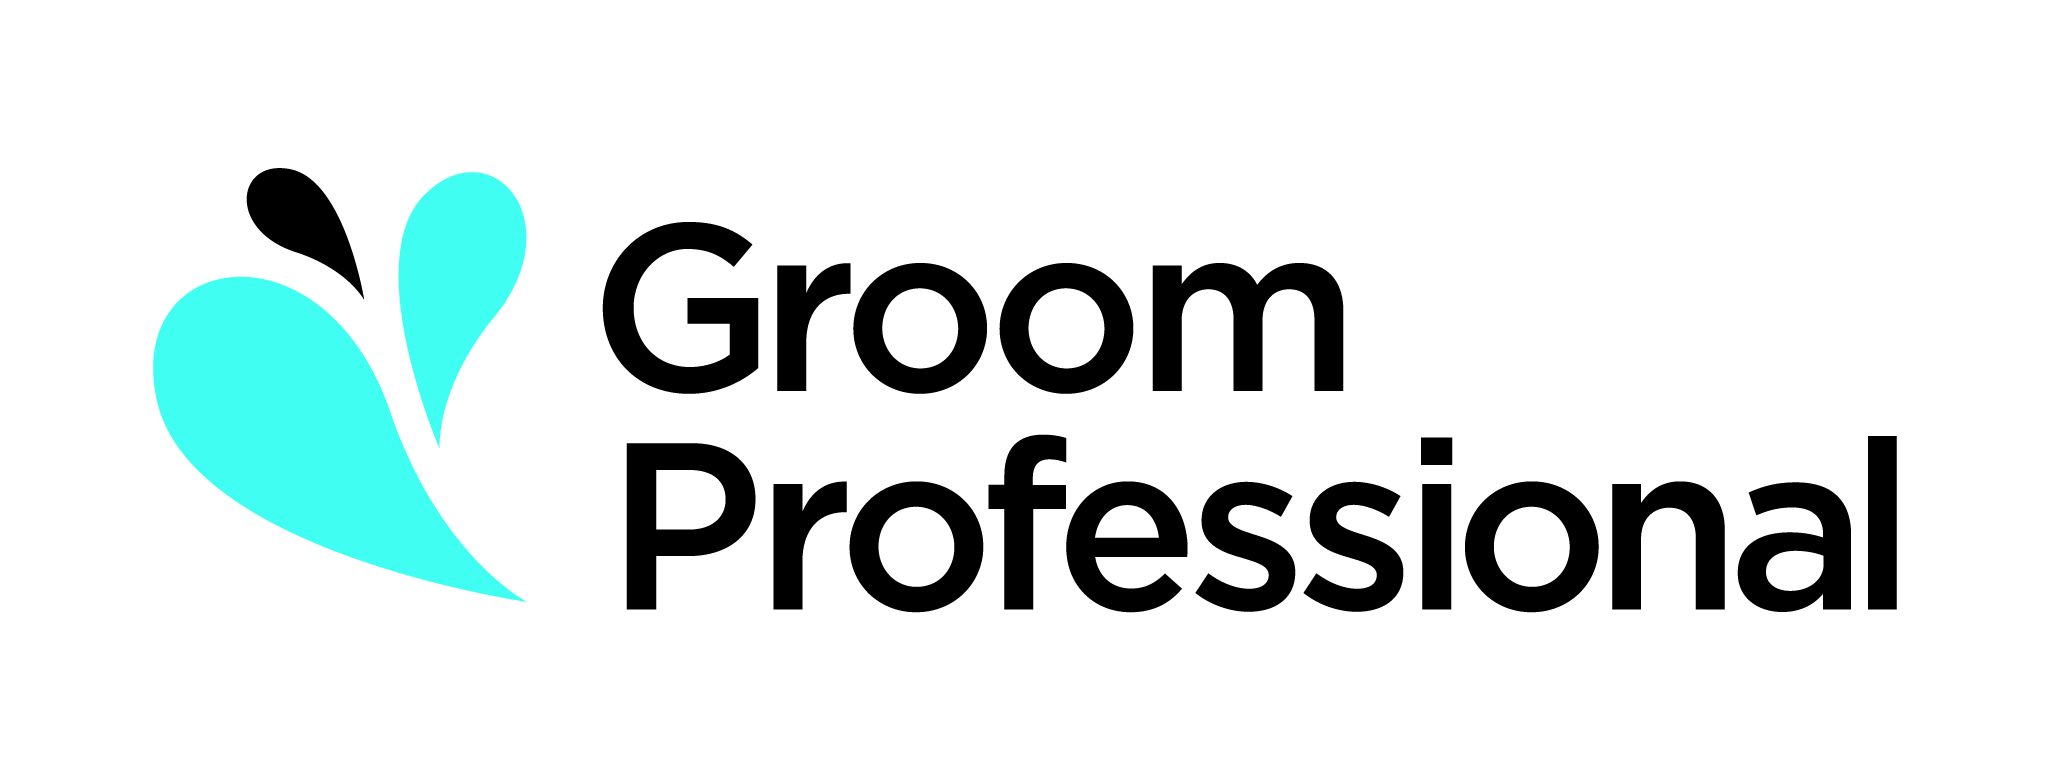 Groom Professional logo